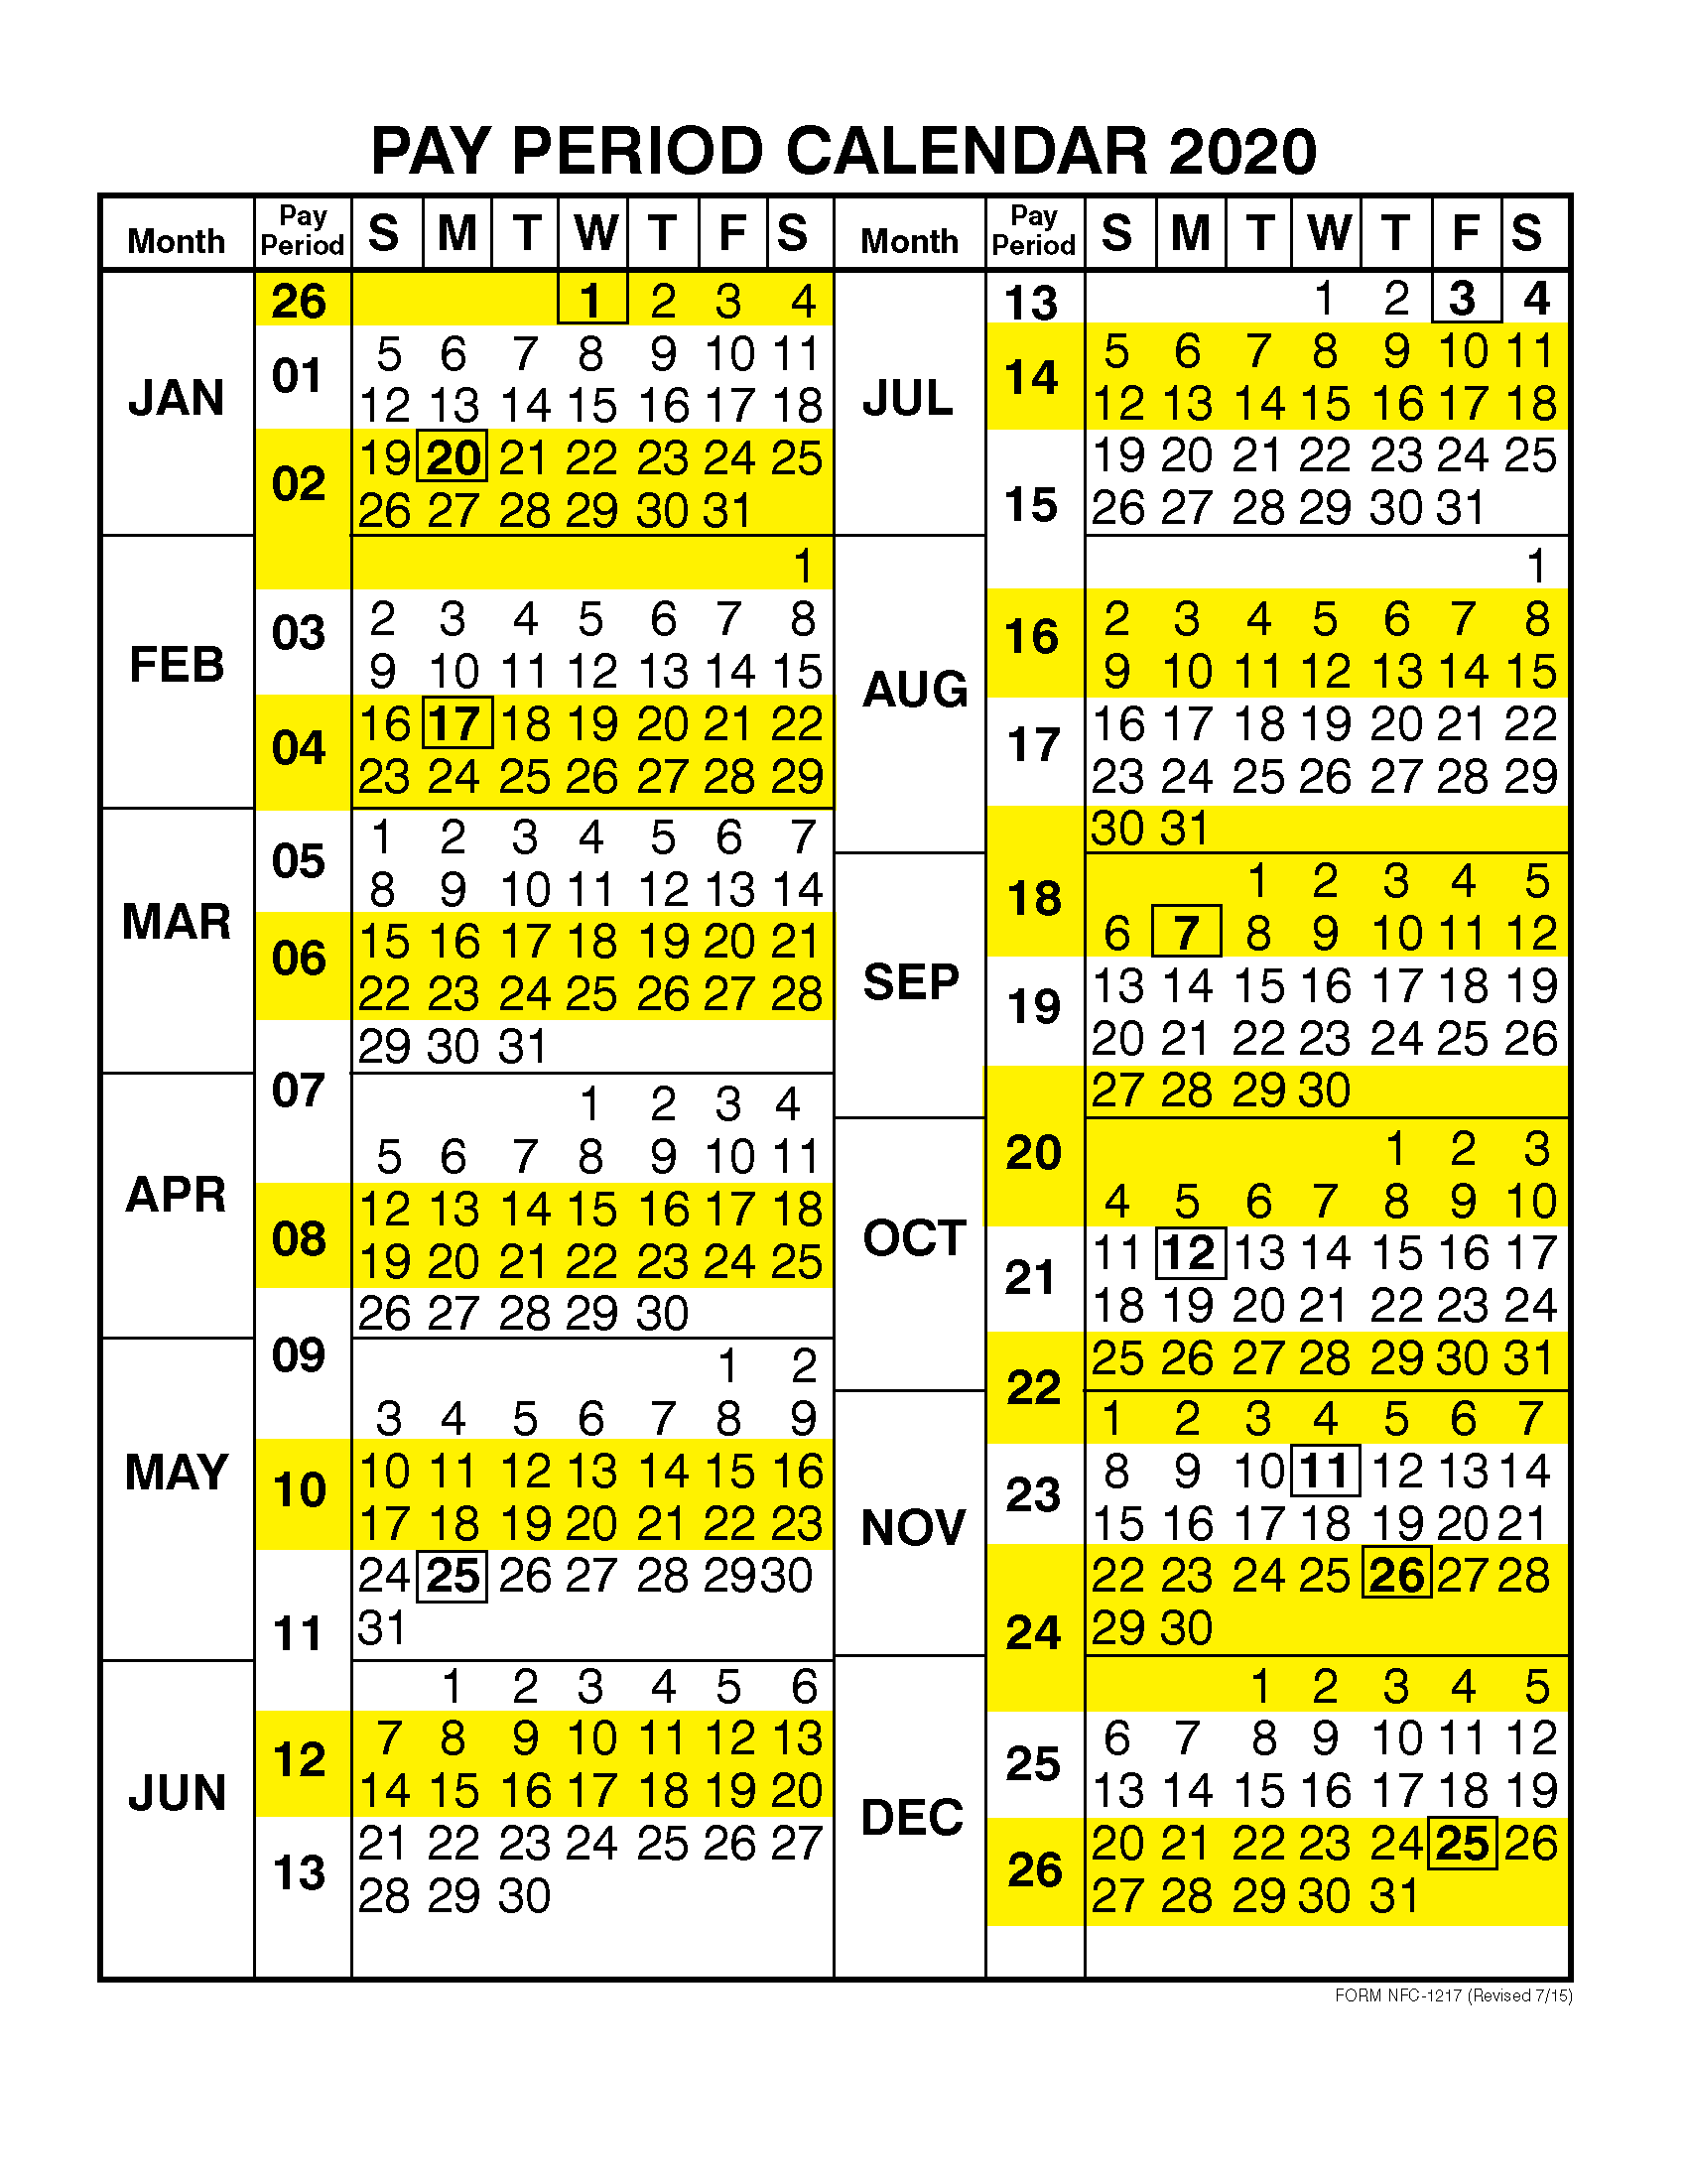 opm pay period calendar 2021 Pay Period Calendar 2020 By Calendar Year Free Printable 2020 Monthly Calendar With Holidays opm pay period calendar 2021